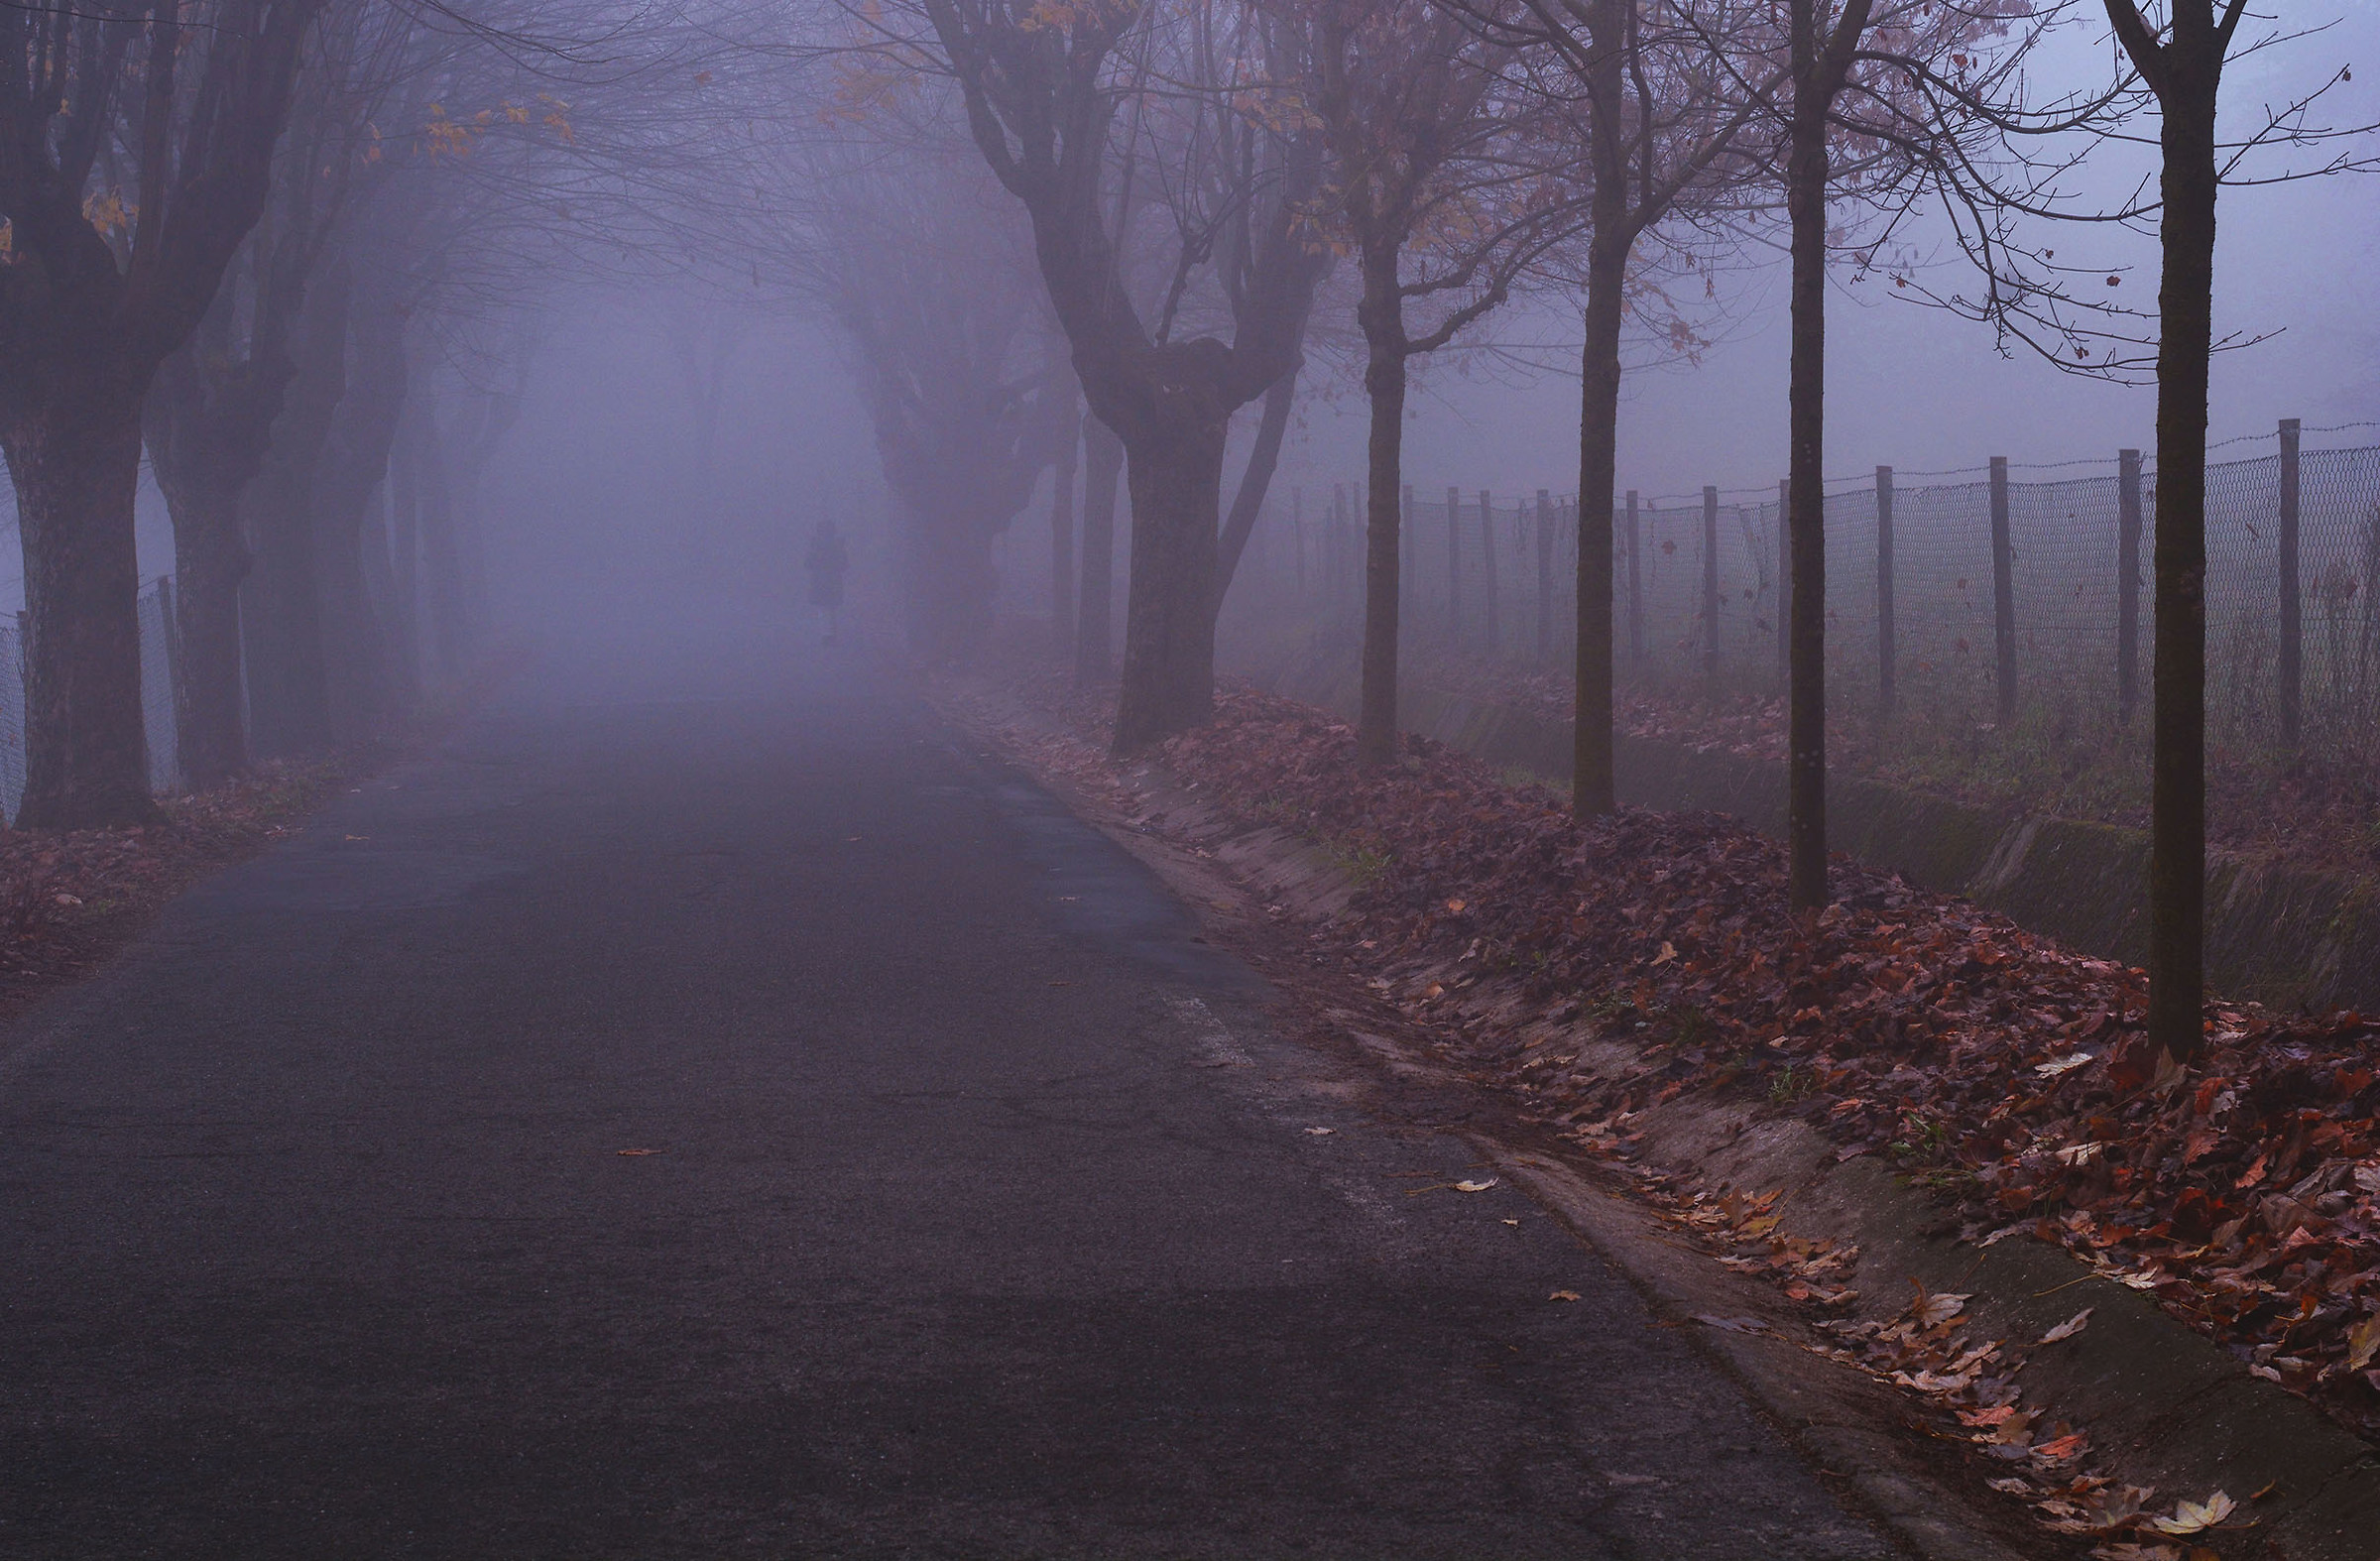 A walk in the fog...